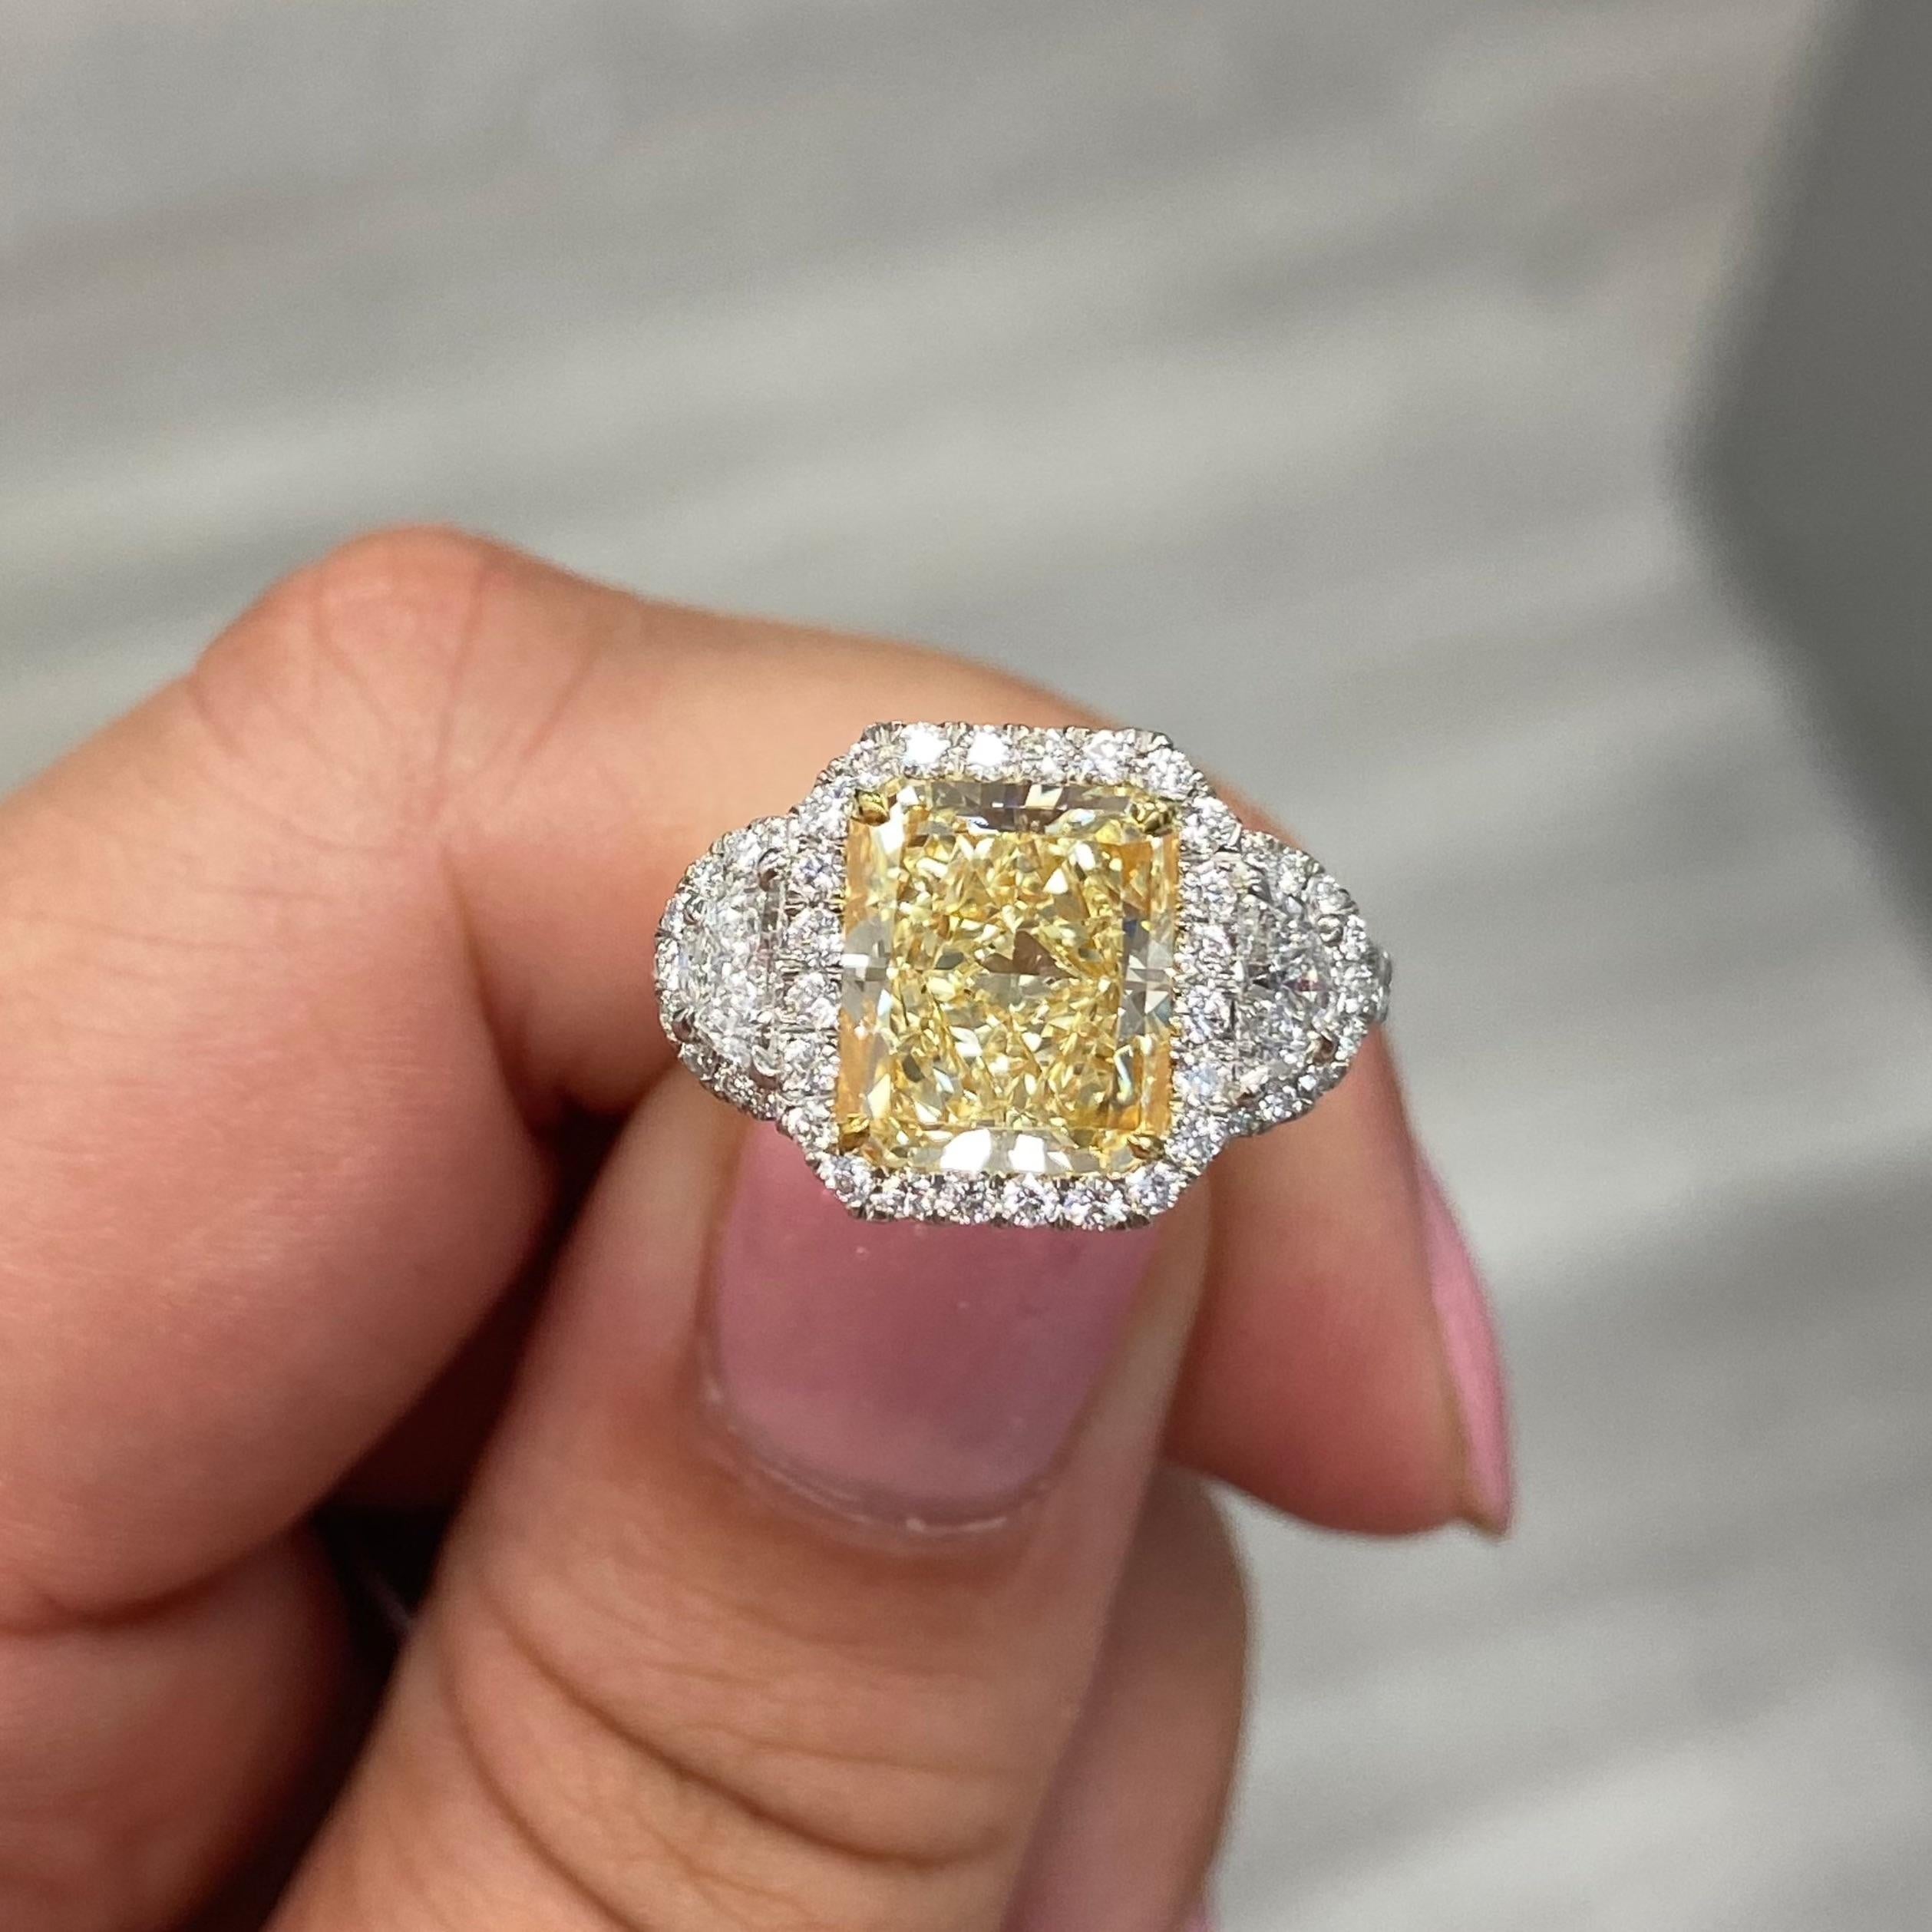 3.57 Carat
Light Yellow (WX) Radiant Diamond
VS1 Clarity 
0.39 Carat Half Moon Side Diamonds
0.87 Carats of Pave
GIA Certified Diamond

Making Extraordinary Attainable with Rare Colors
